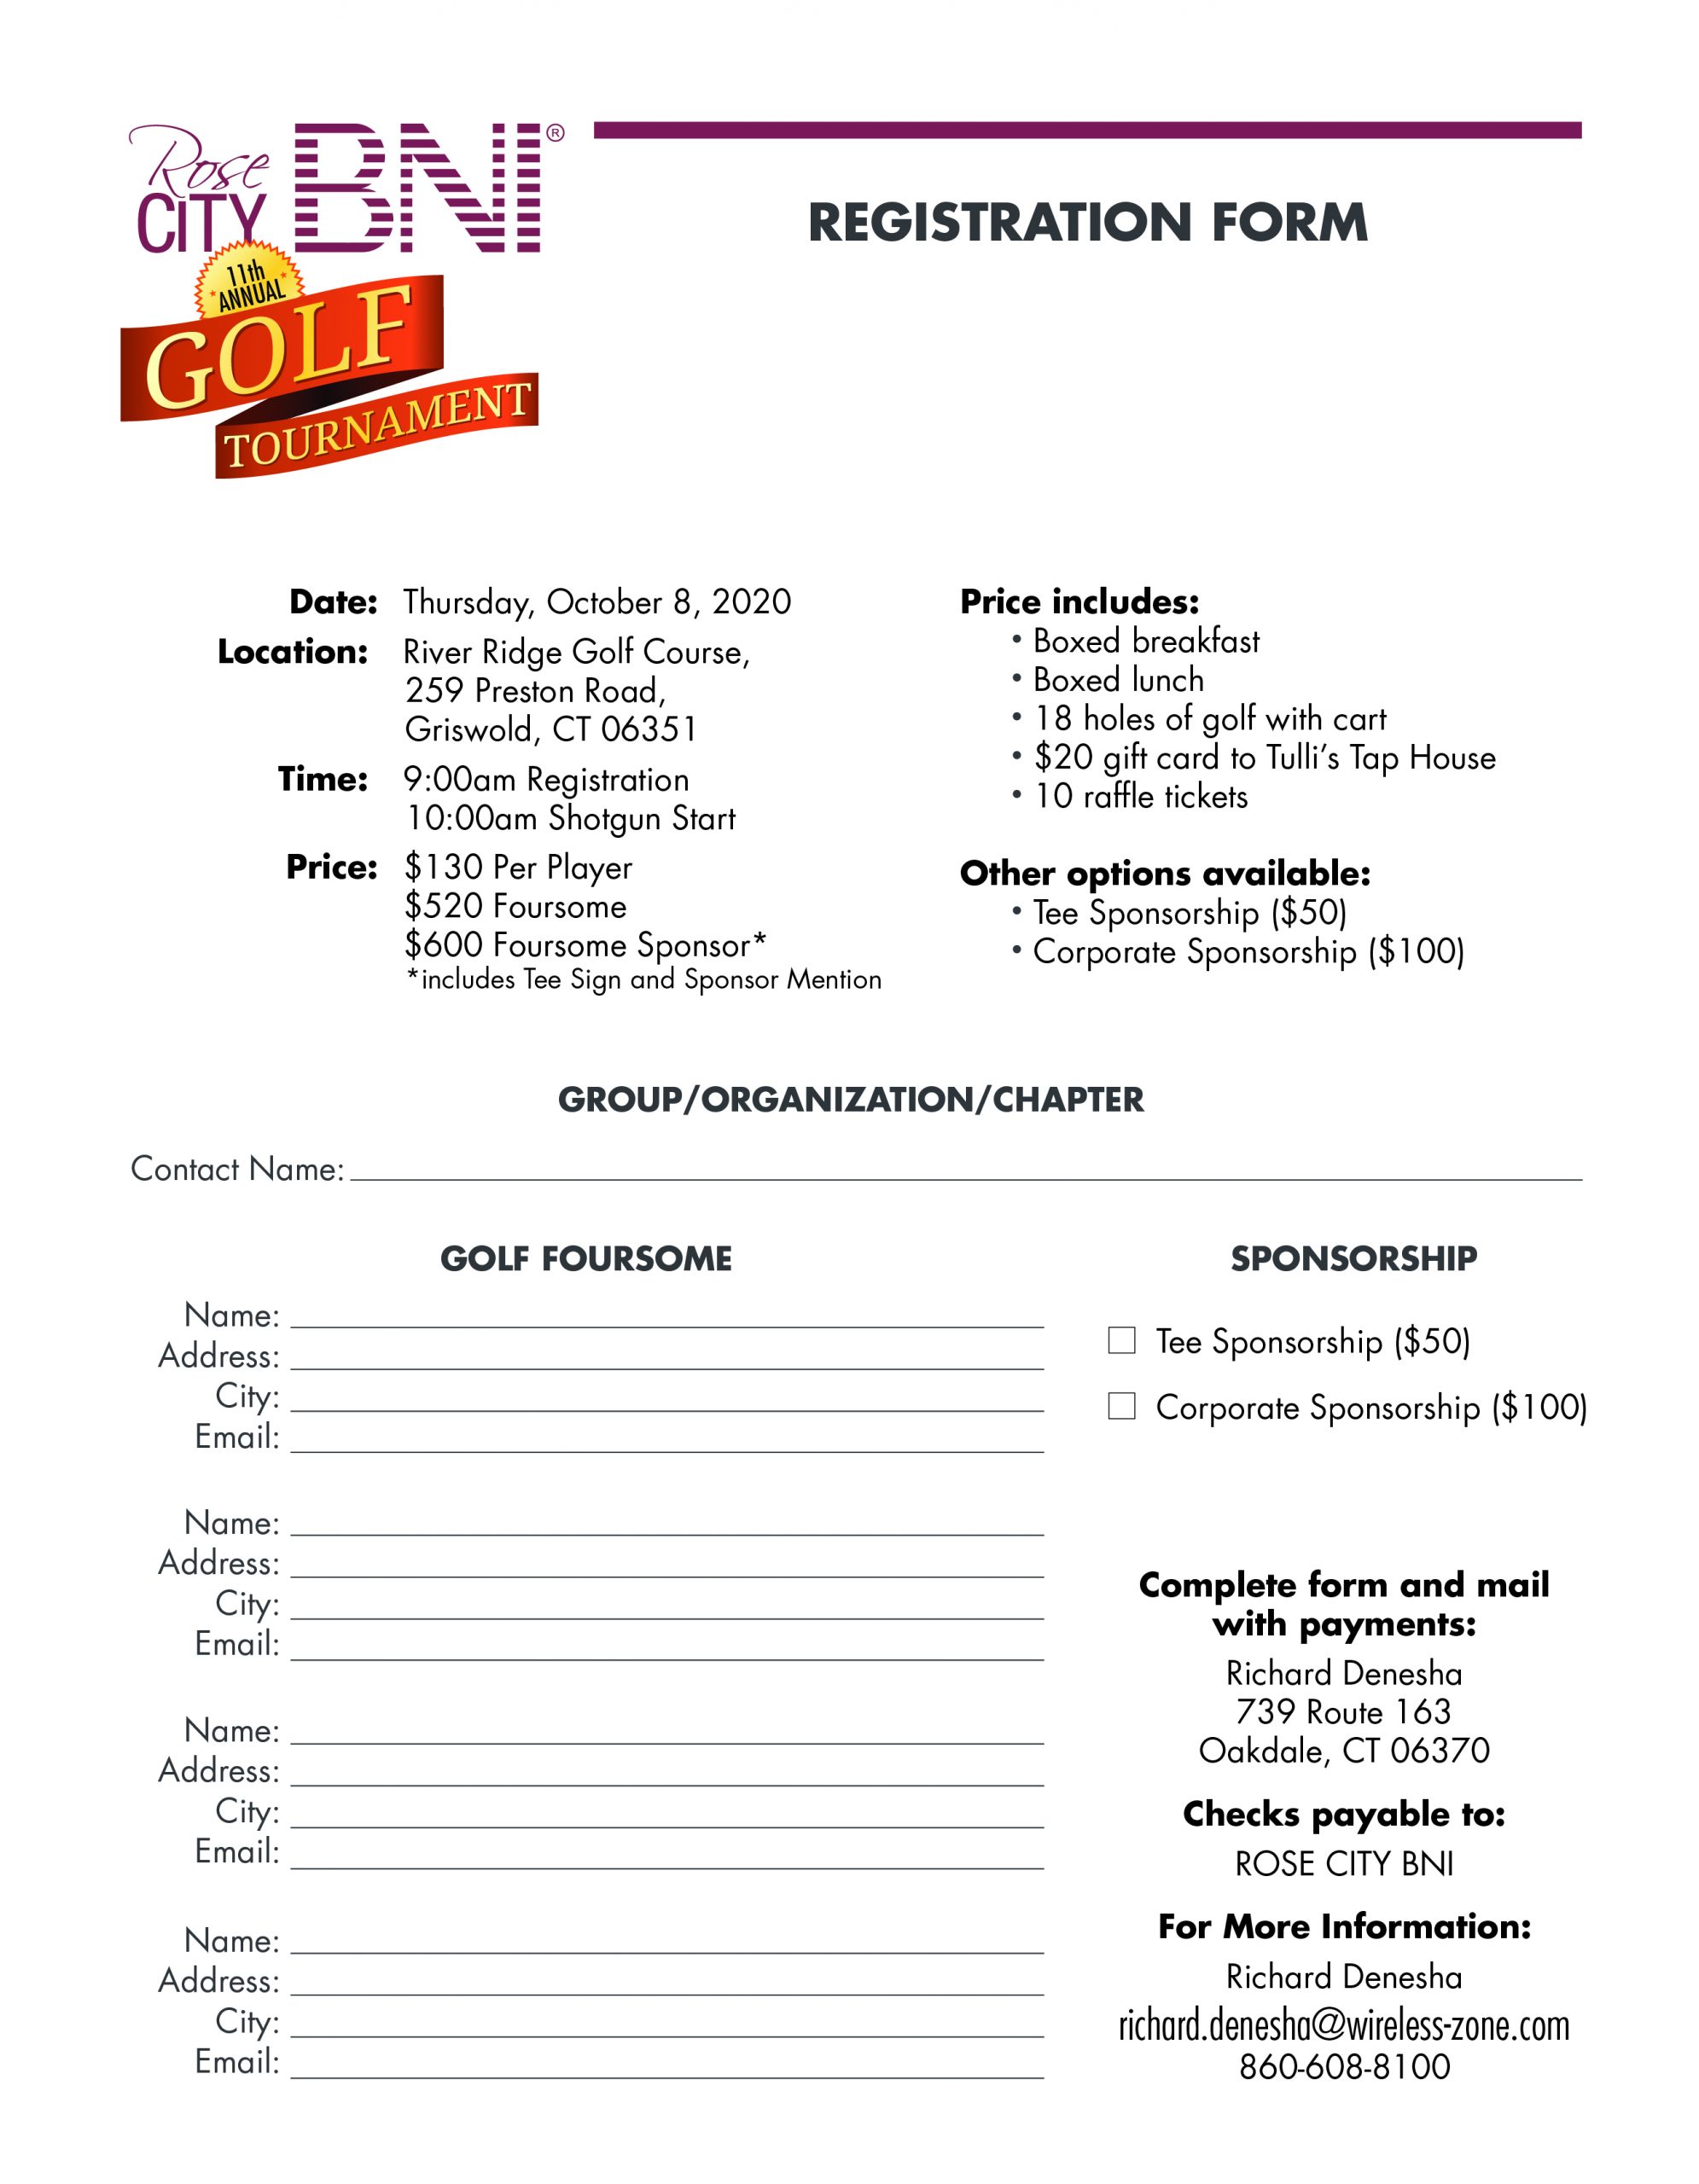 Rose City BNI 11th Annual Golf Tournament October 8, 2020